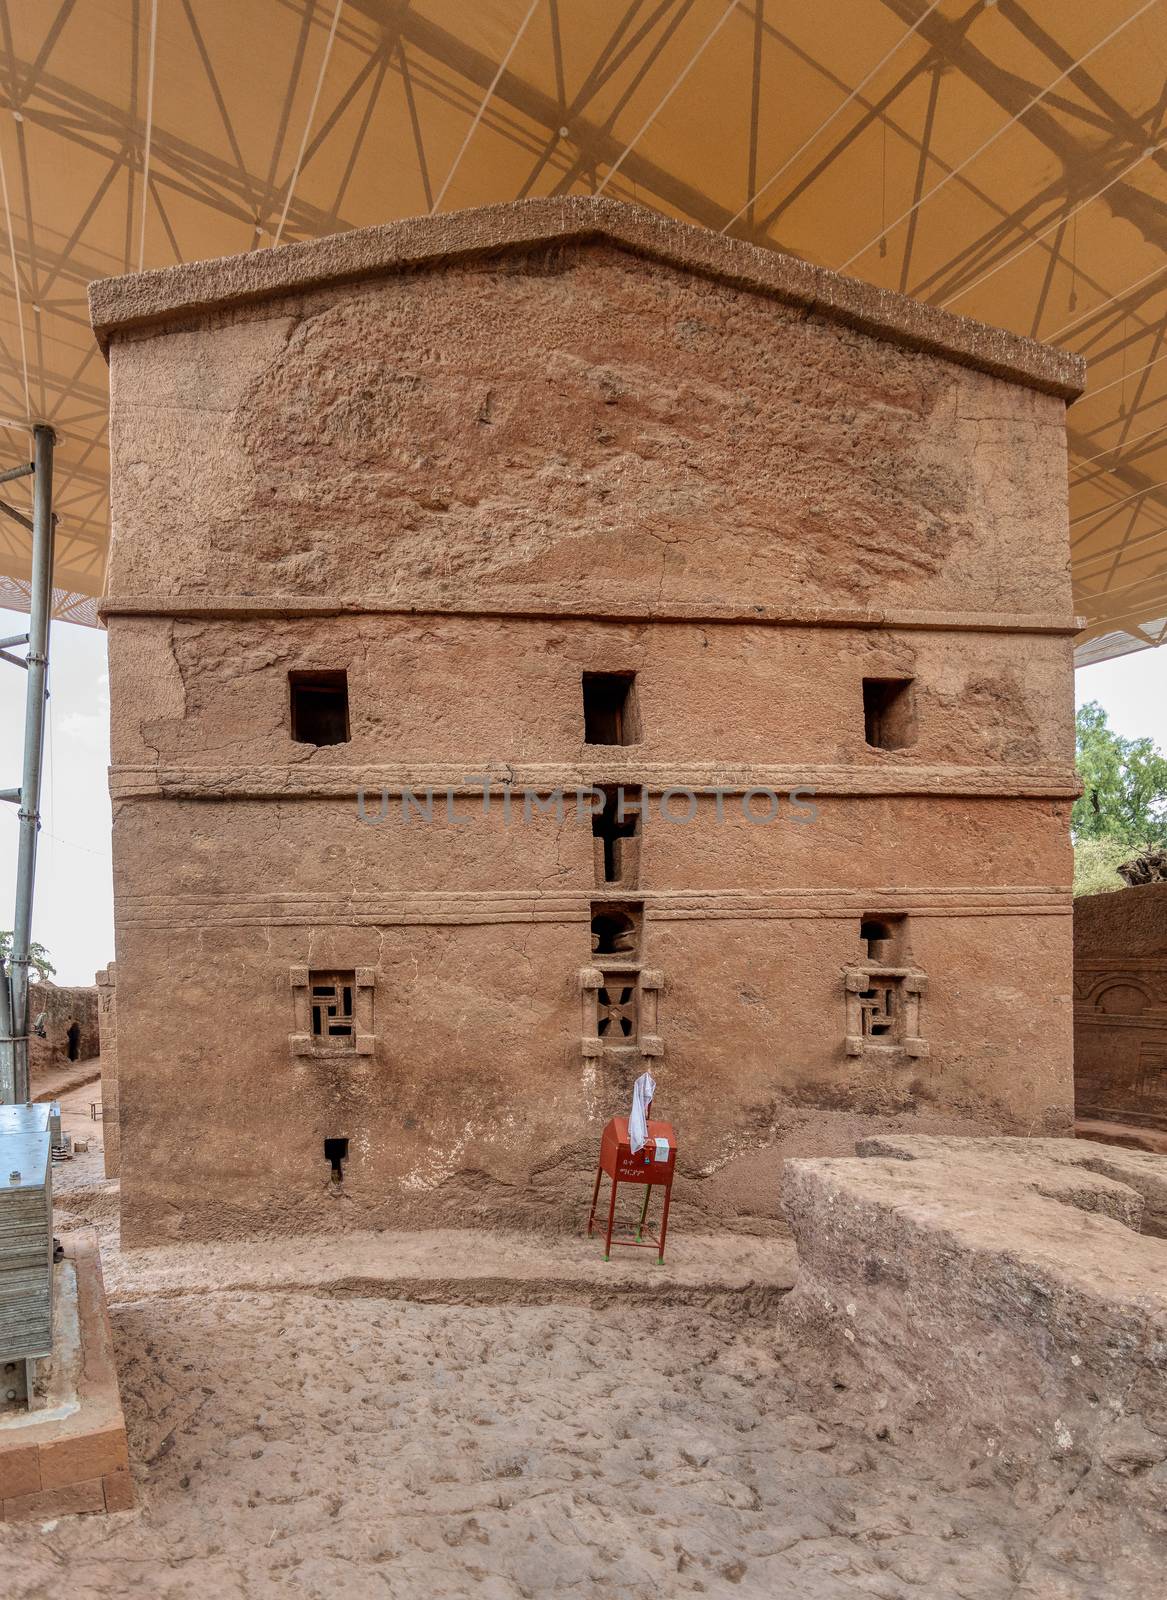 Biete Meskel - English name House of the Cross, Orthodox underground monolith church carved into rock. UNESCO World Heritage Site, Lalibela Ethiopia, Africa